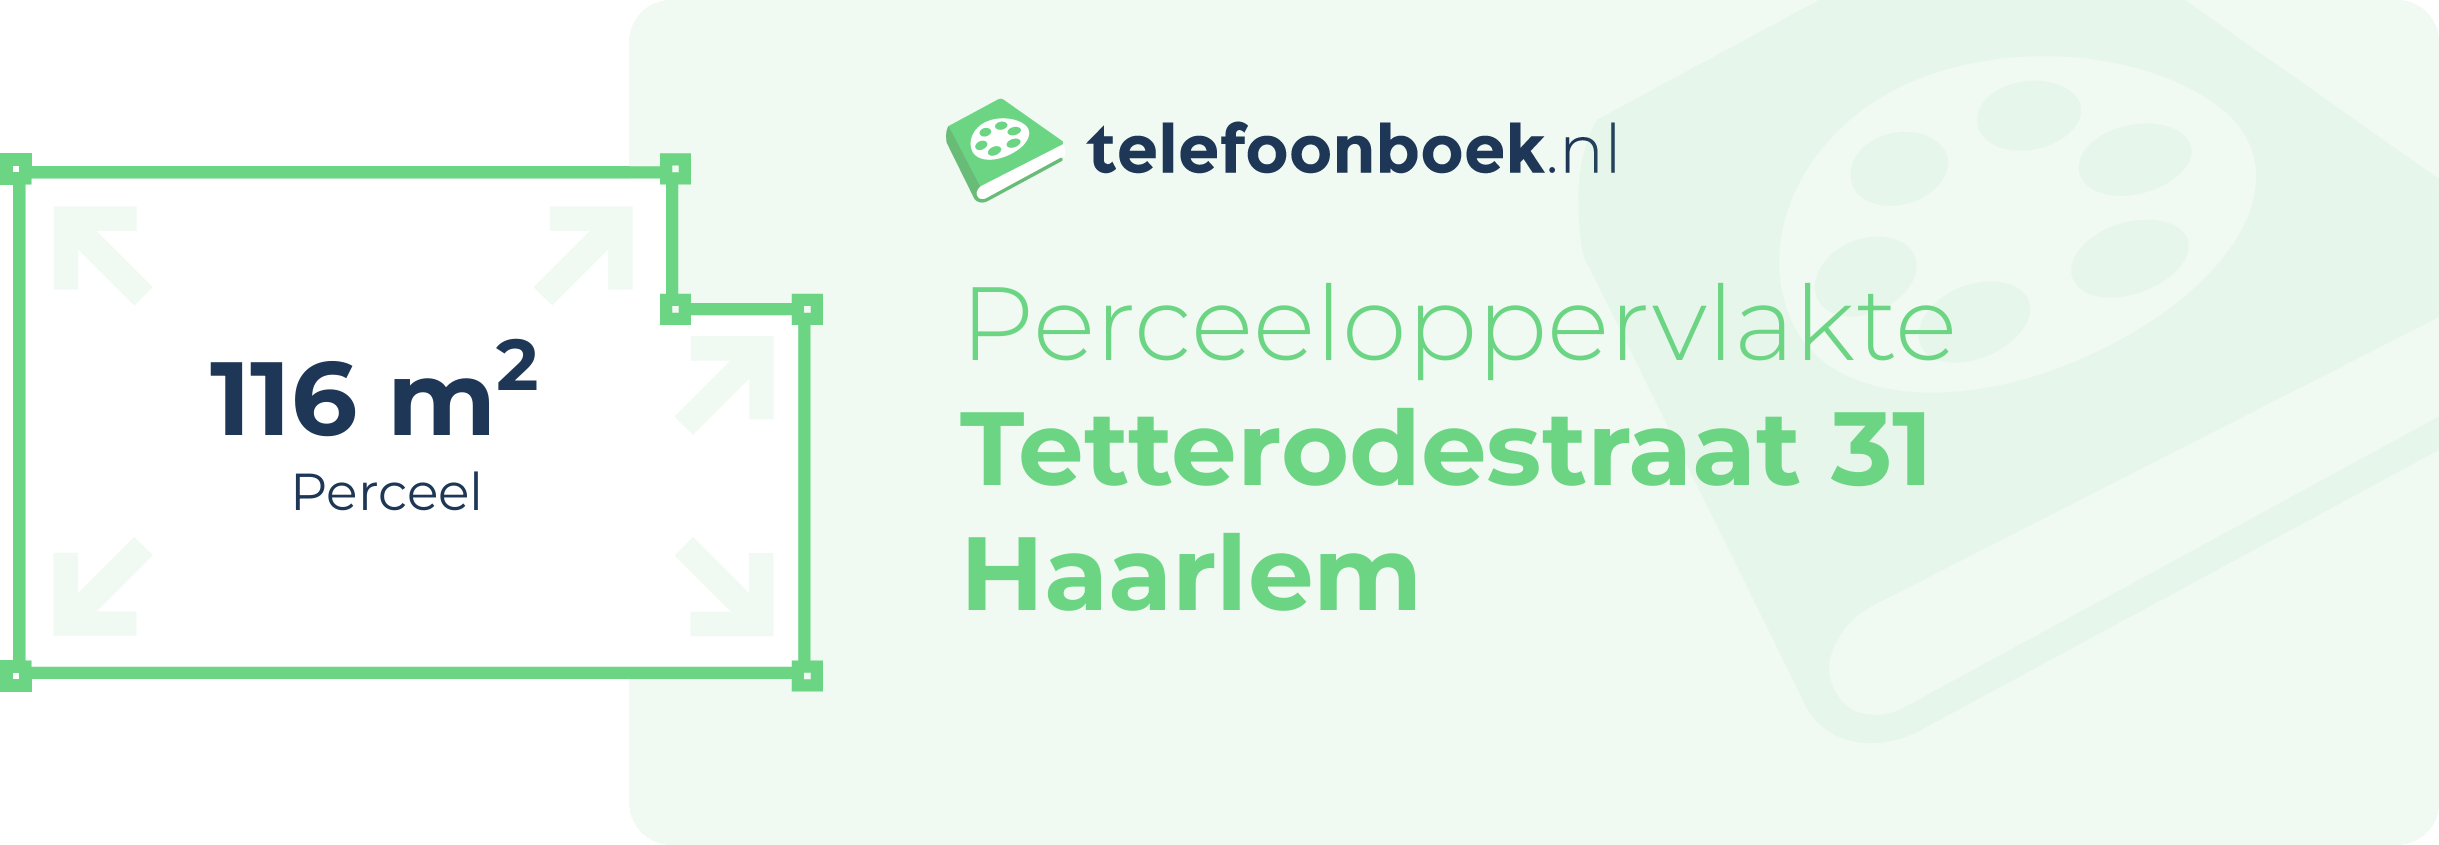 Perceeloppervlakte Tetterodestraat 31 Haarlem